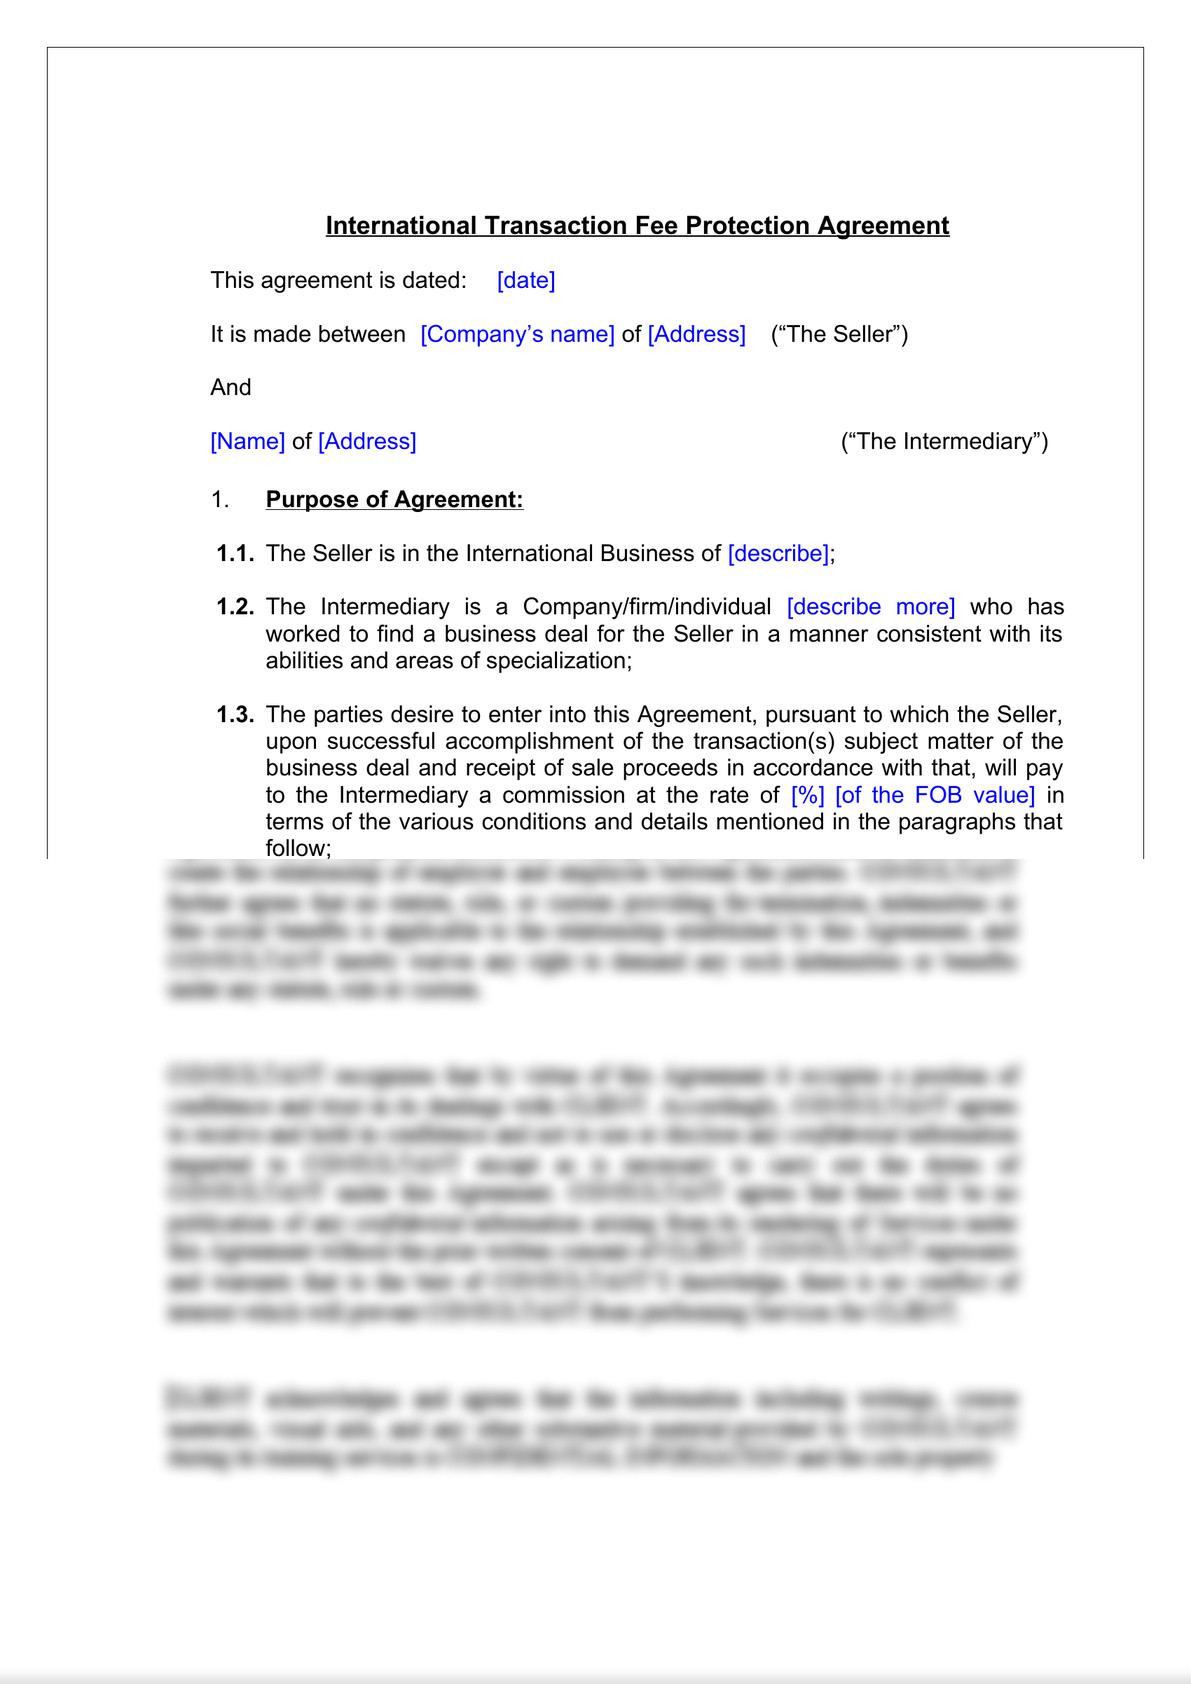 International Transaction Fee Protection Agreement-2